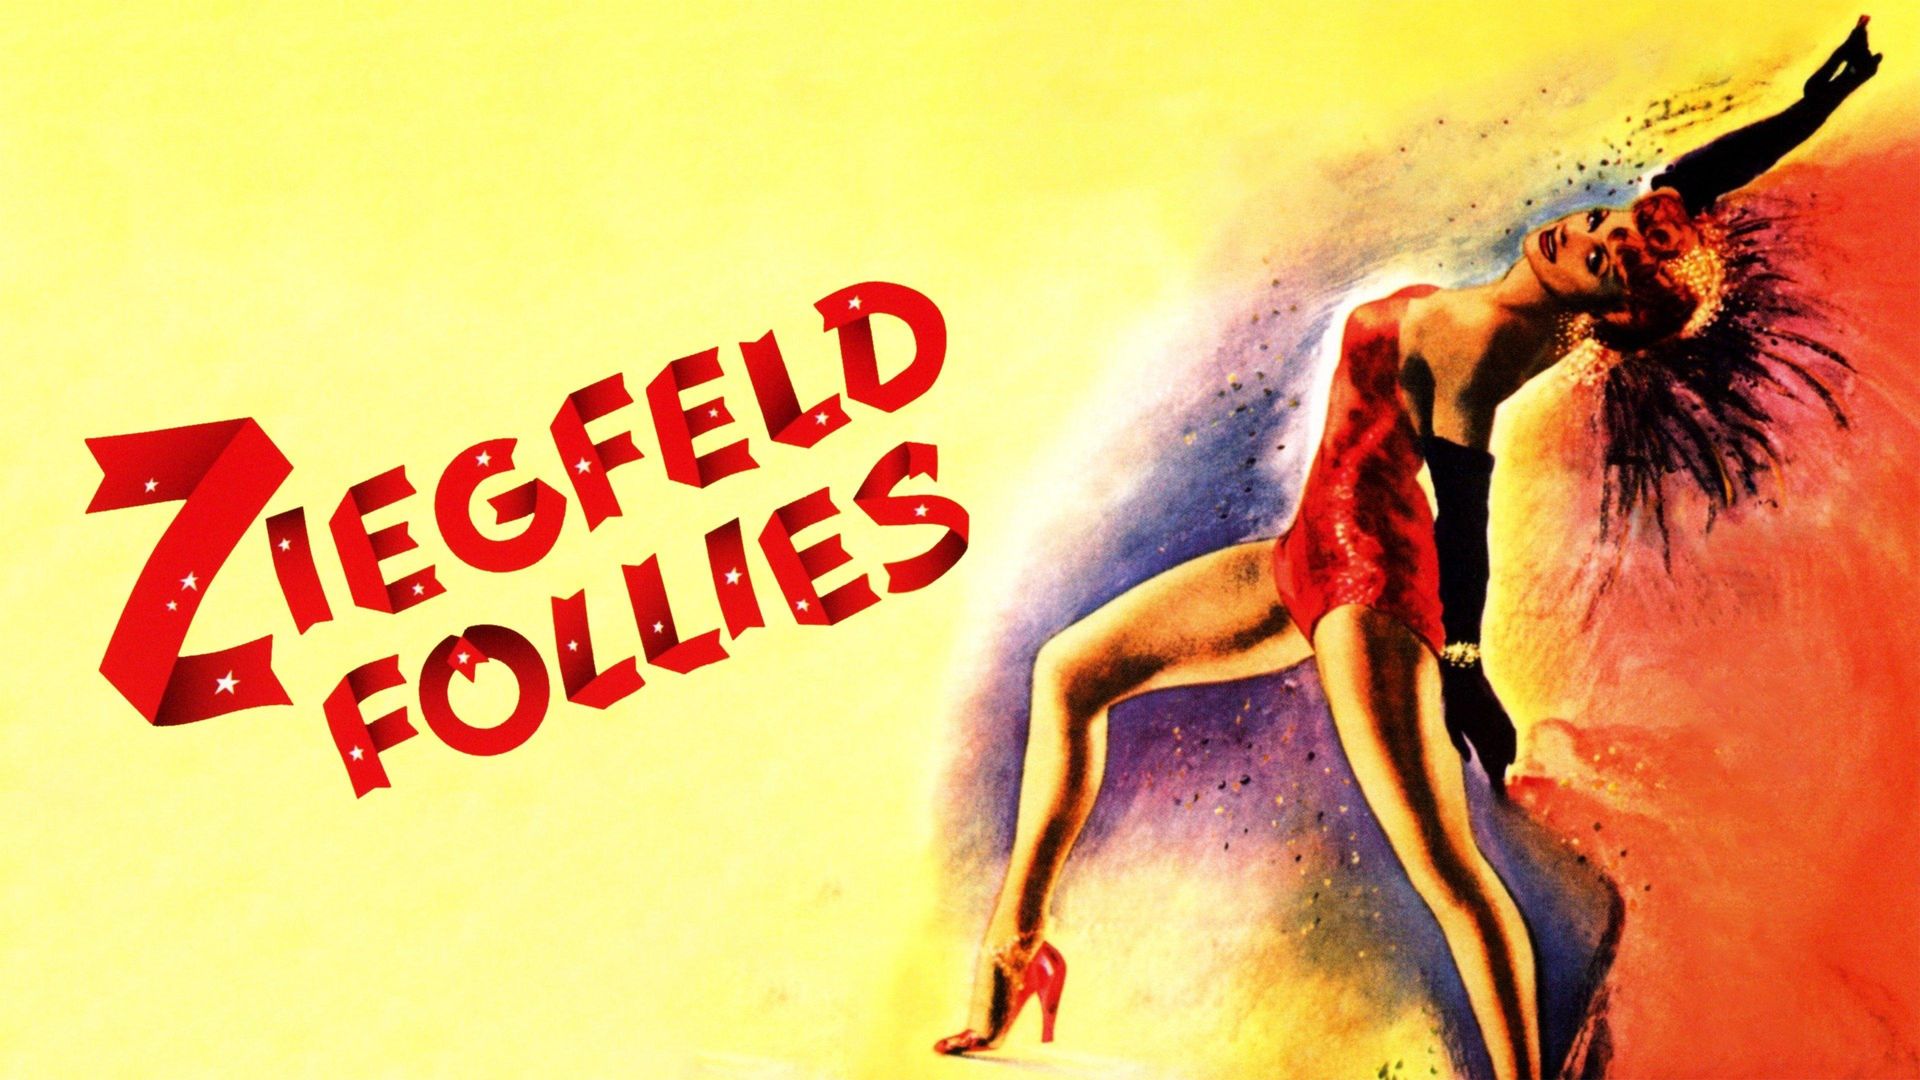 Ziegfeld Follies Backdrop